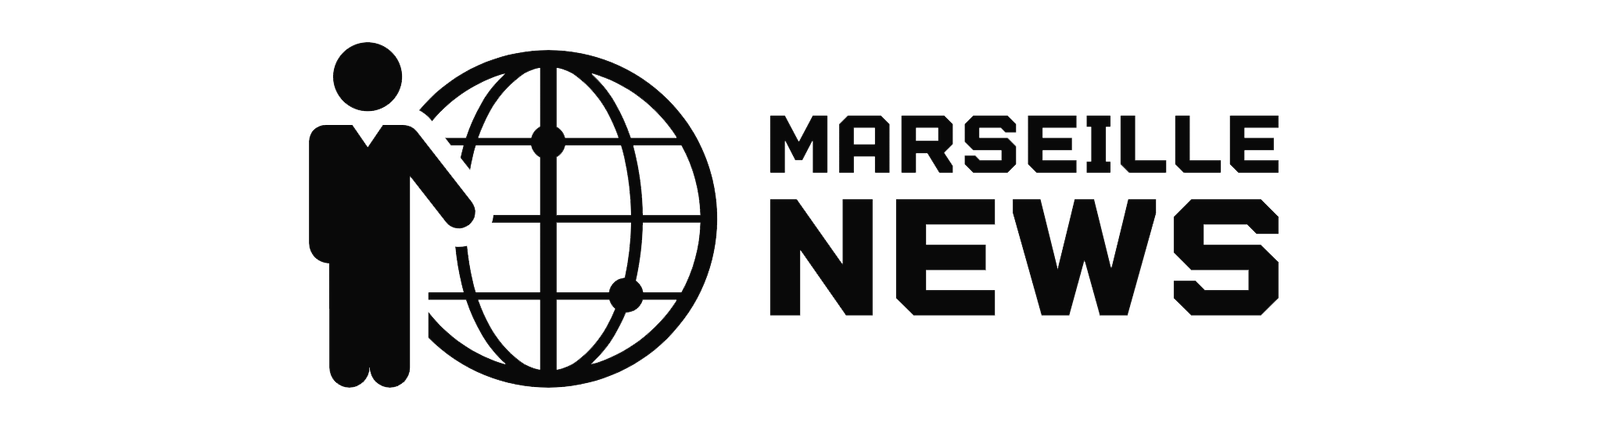 Marseille News